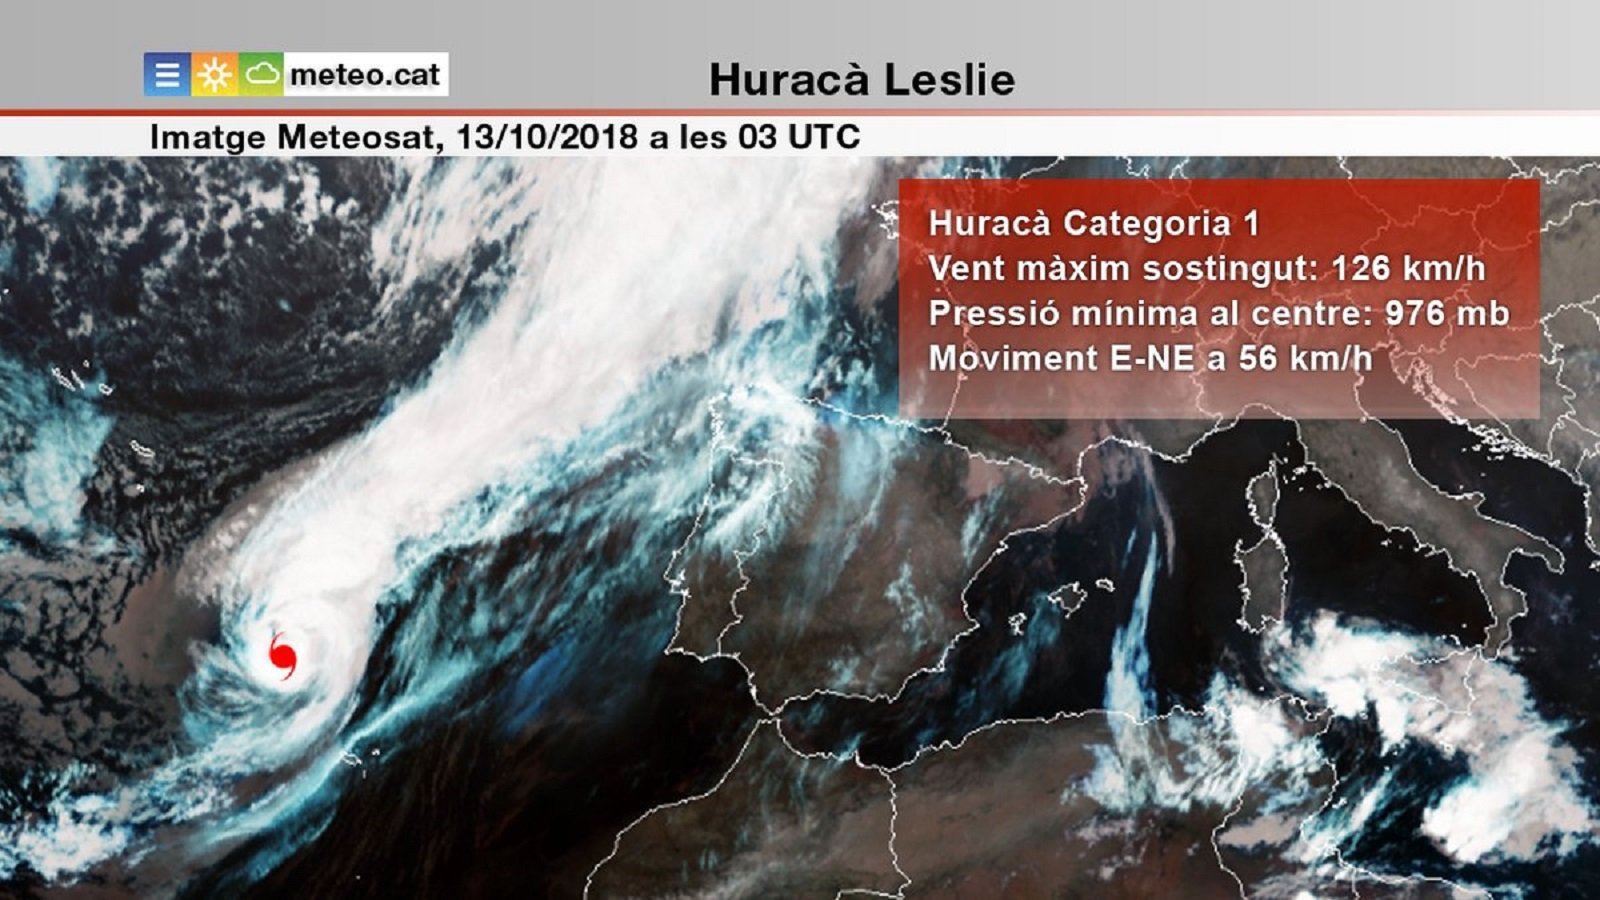 El huracán Leslie pone en alerta a Portugal